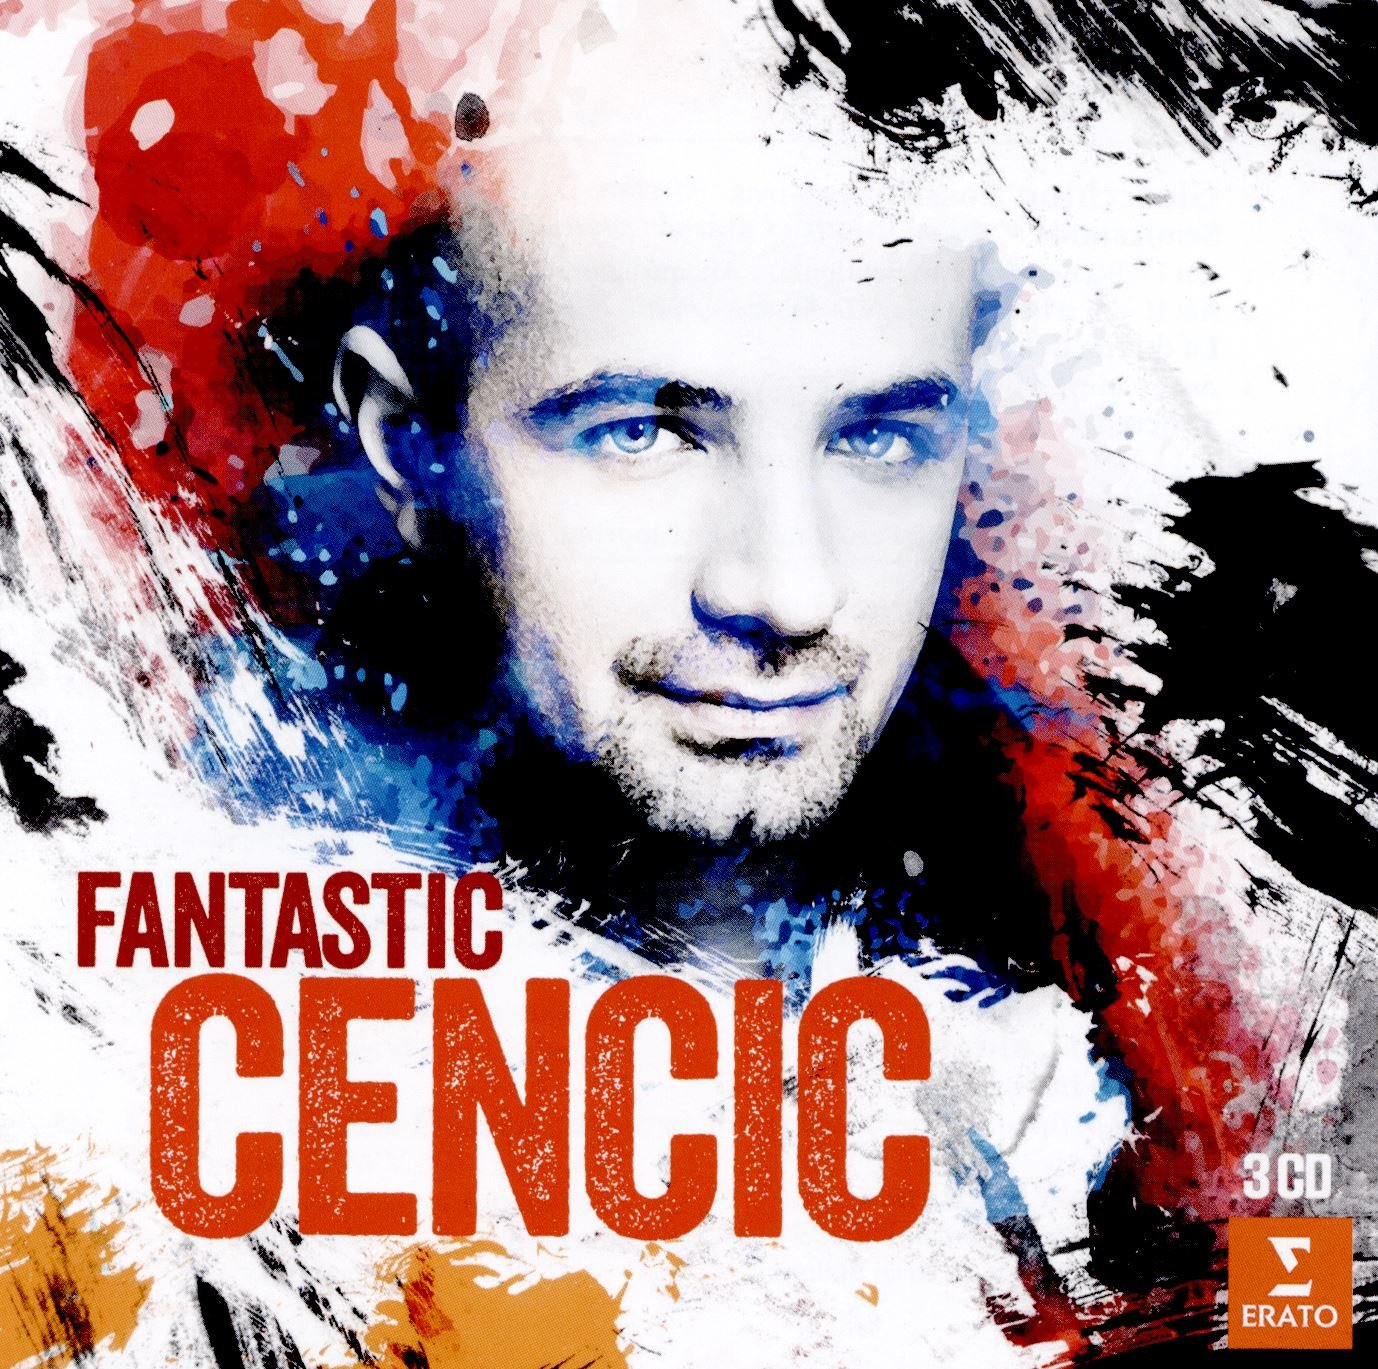 Max Emanuel Cencic CD - Fantastic Cencic